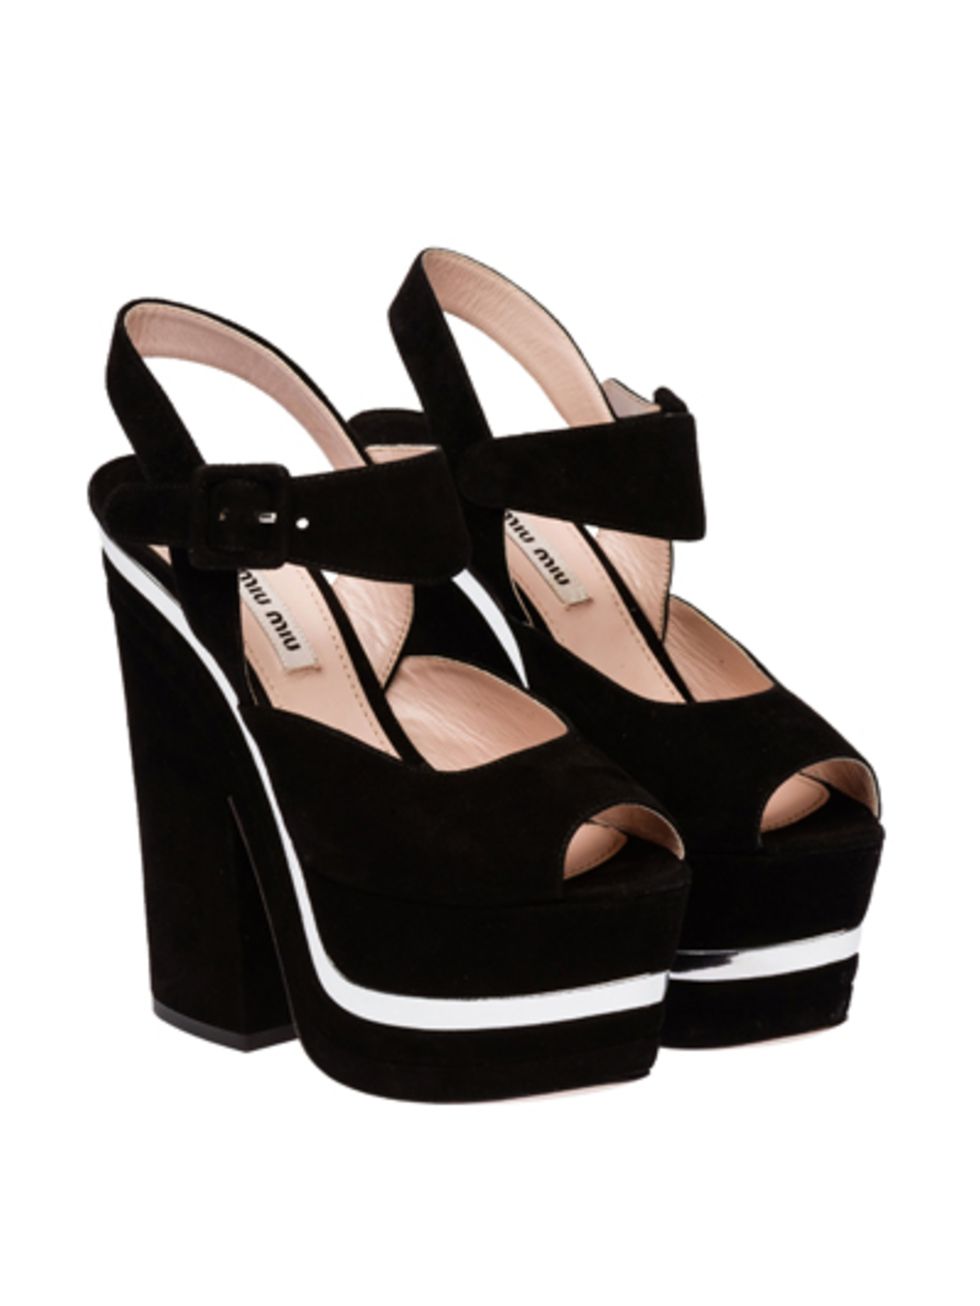 Brown, Product, Sandal, High heels, Basic pump, Tan, Fashion, Black, Beige, Dancing shoe, 